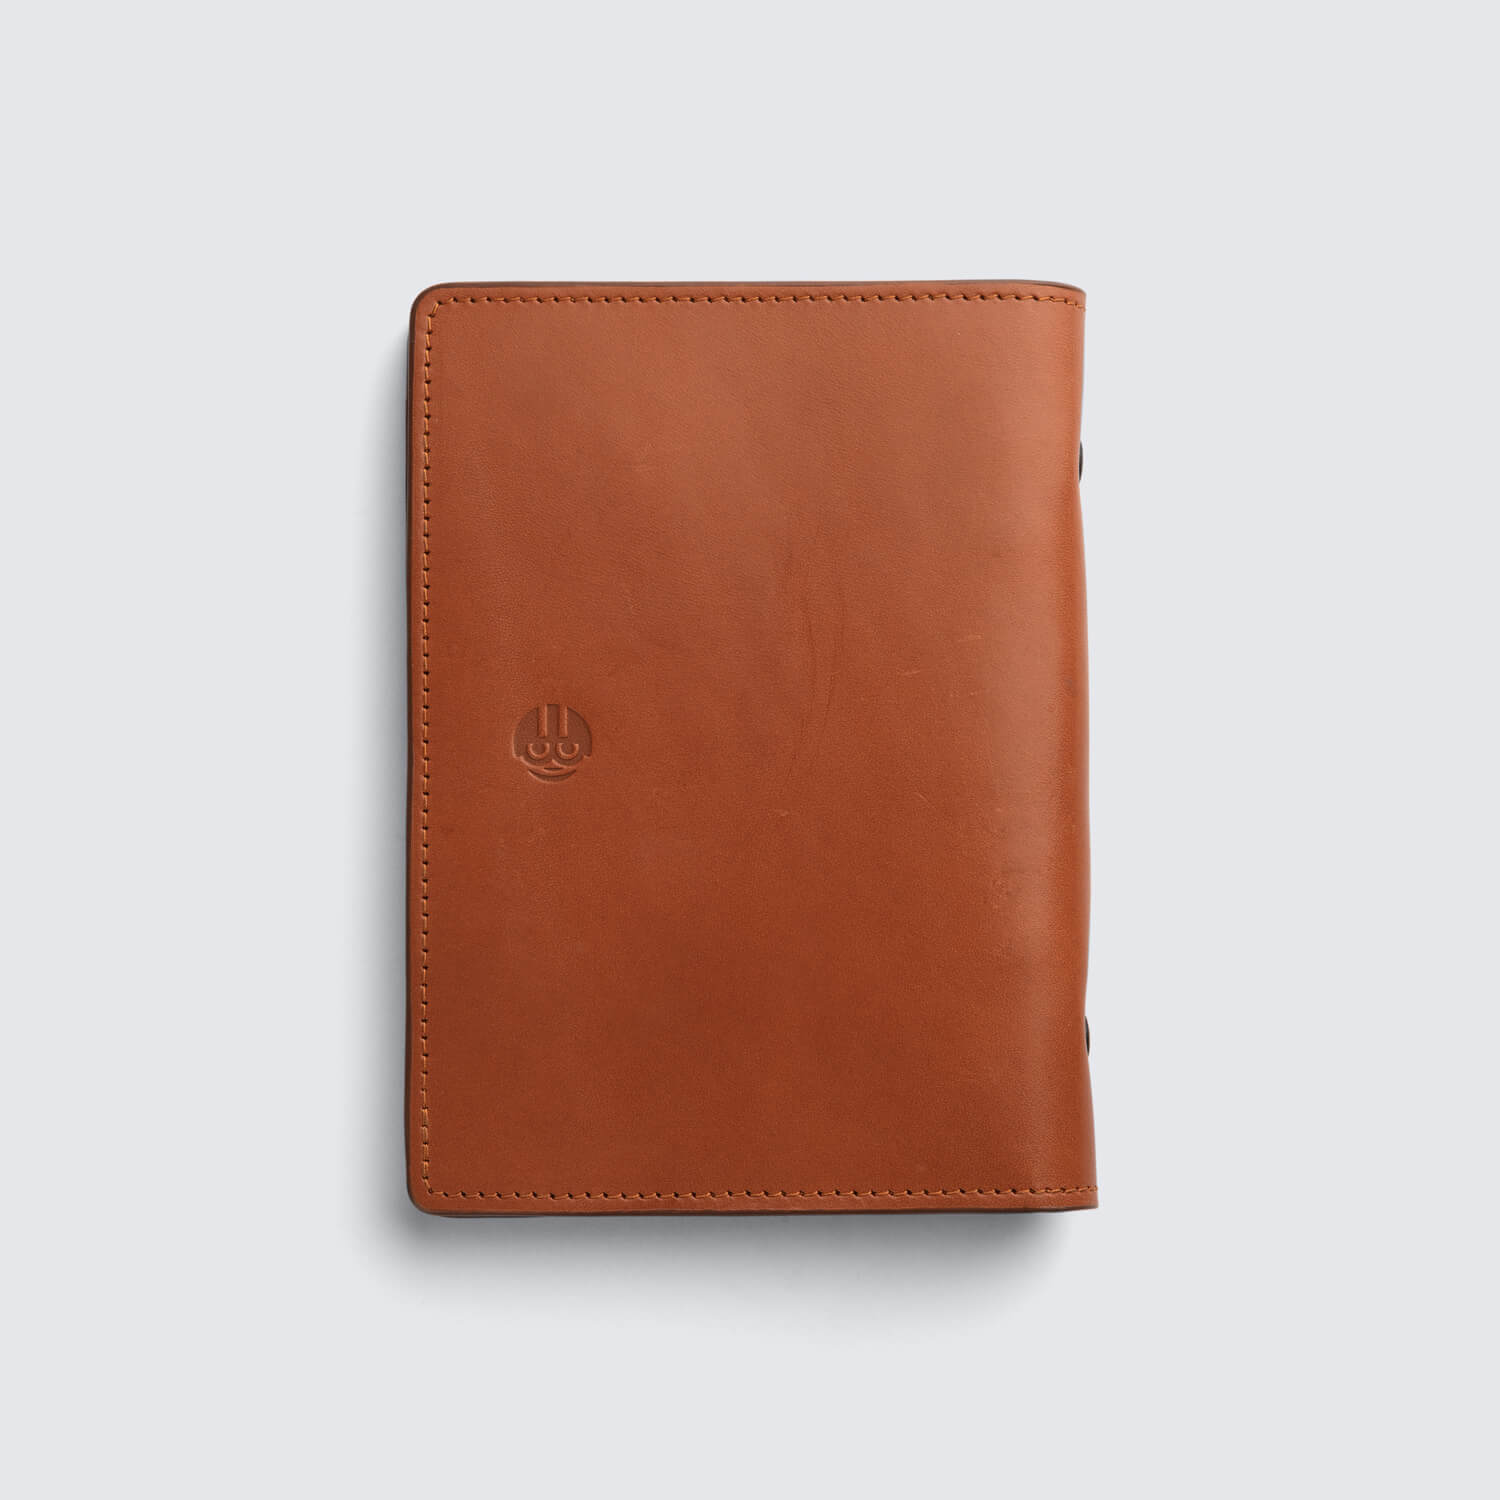 Leather Notebook - Automobilist - Cognac